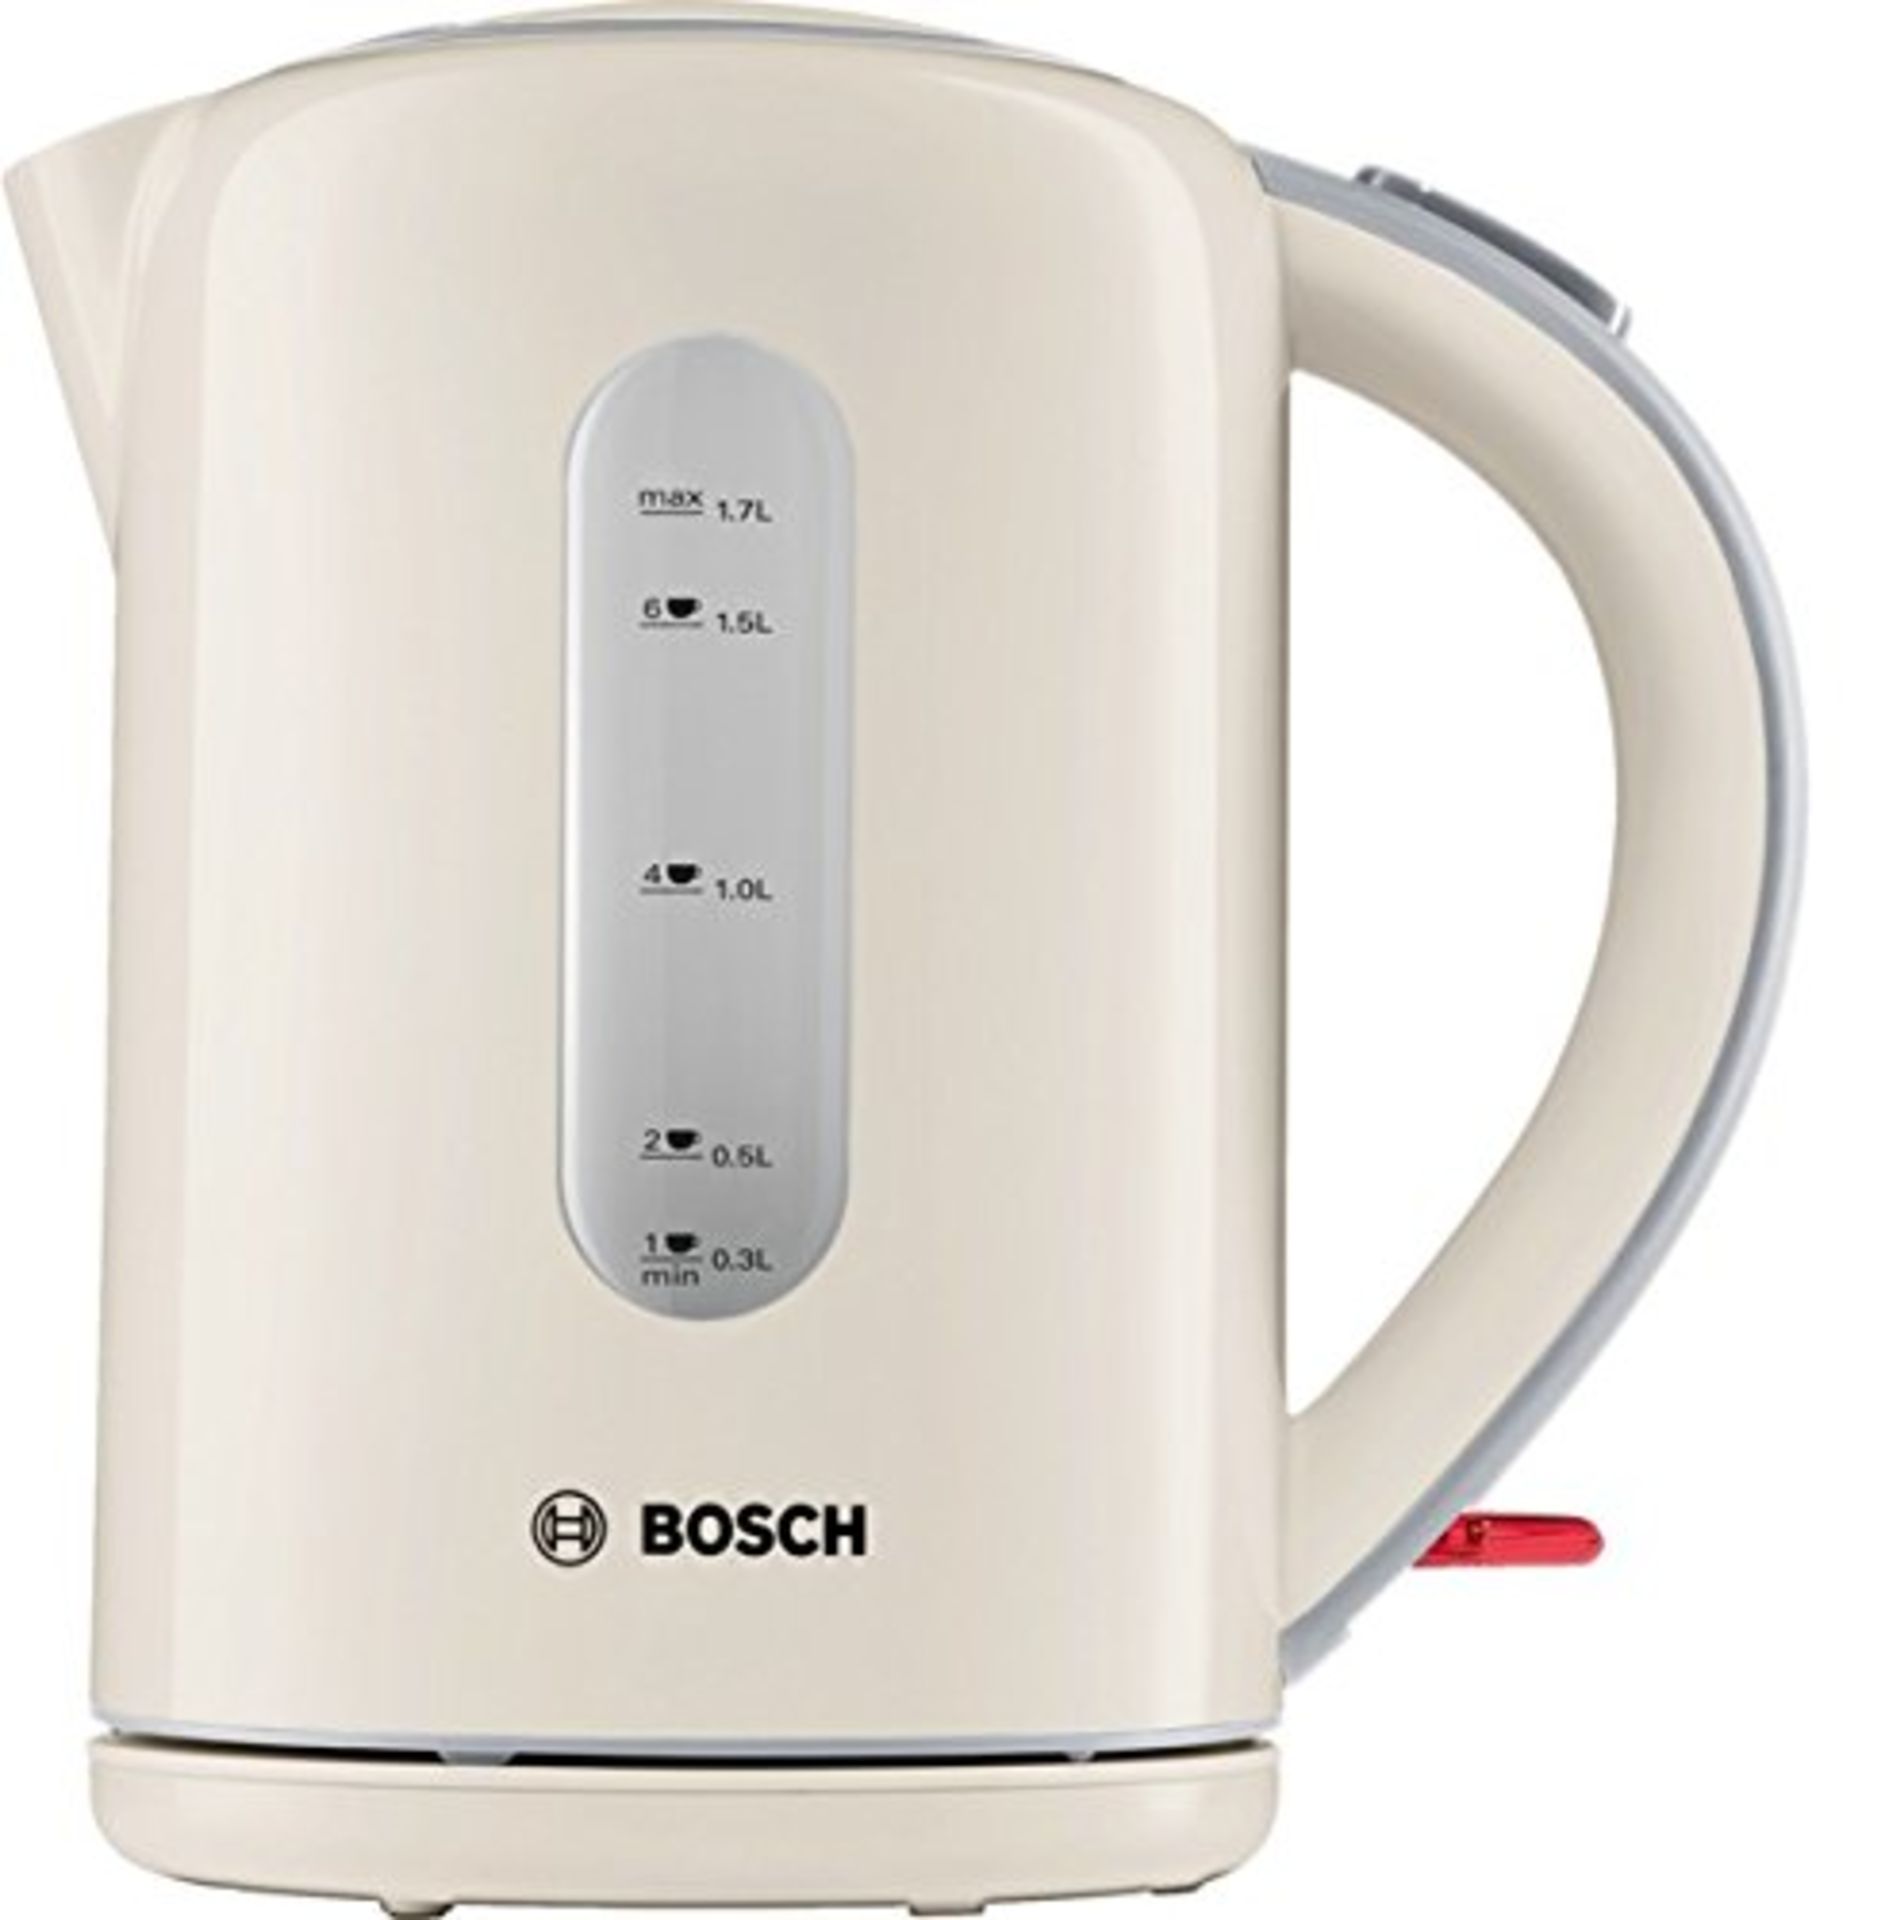 V Brand New Bosch 1.7l Cordless Electric Kettle 3000W (Cream & Grey) ISP £29.45 (Amazon)